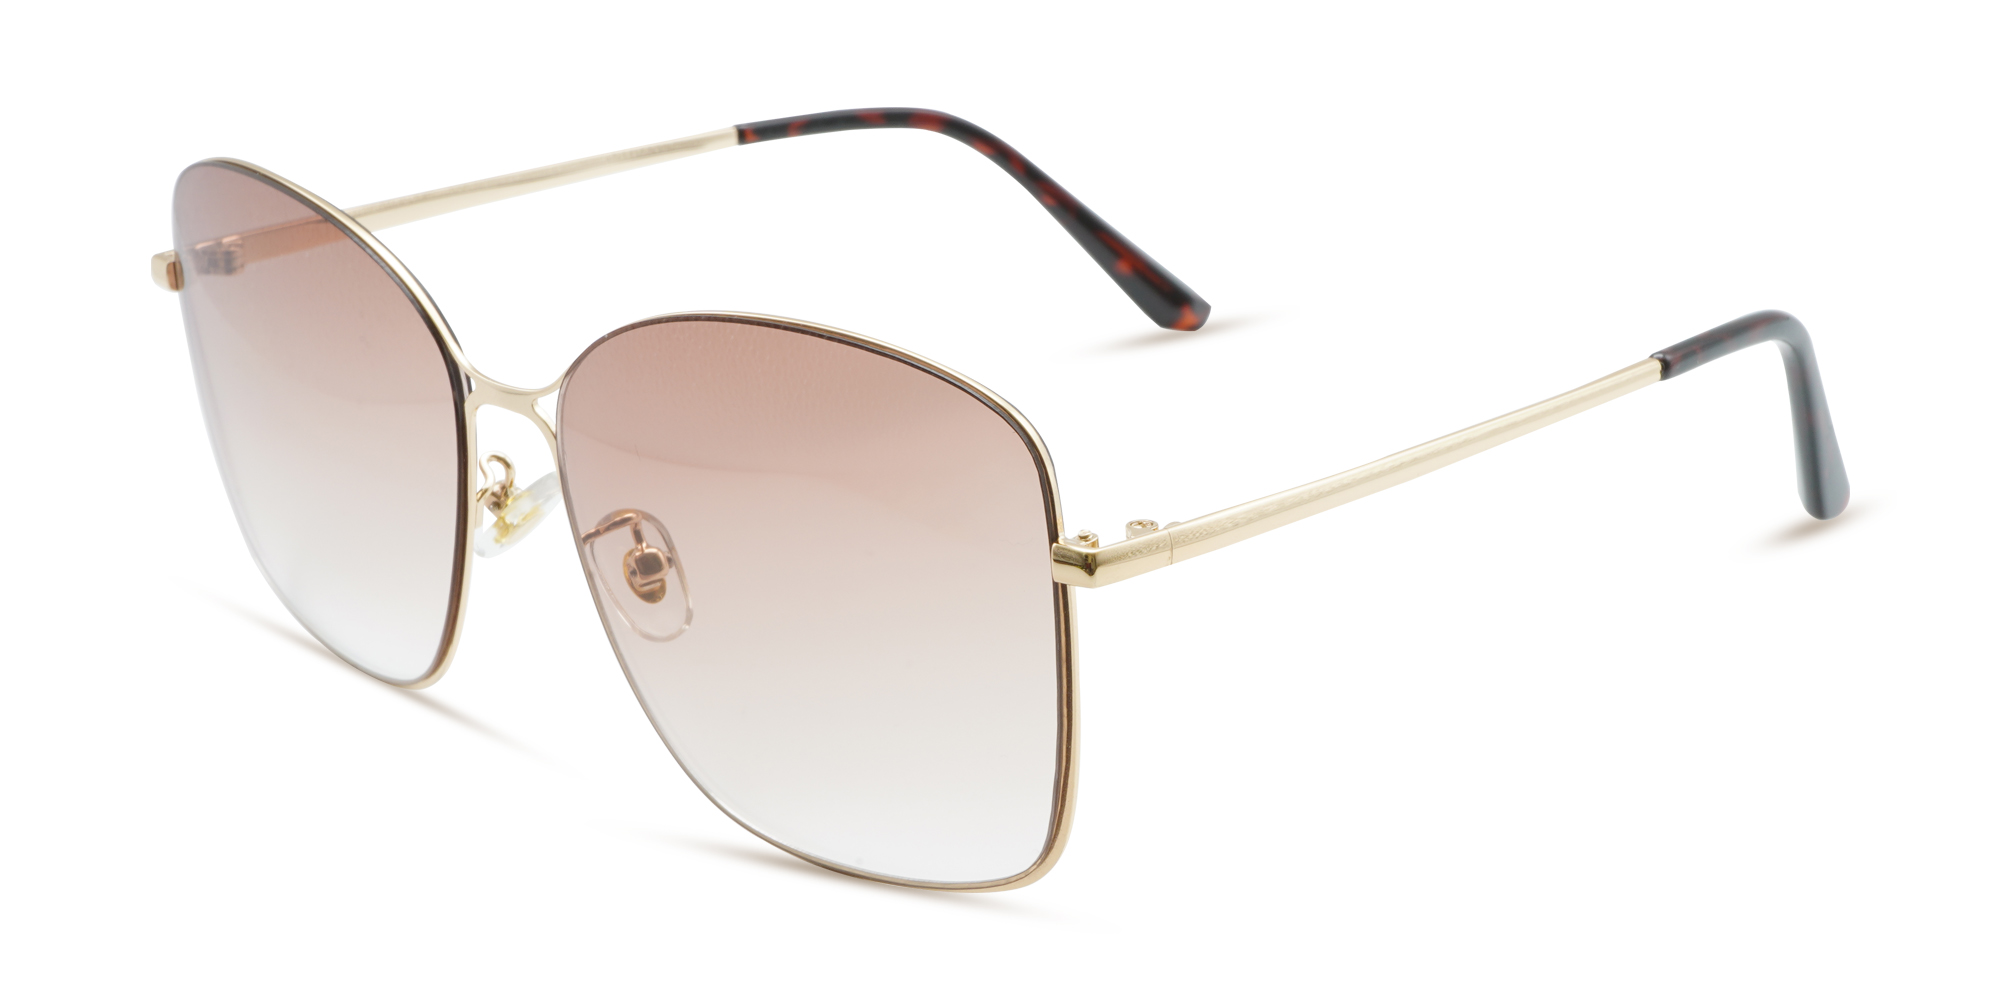 Homell Sunglasses Gold - Women Fashion Sunglasses